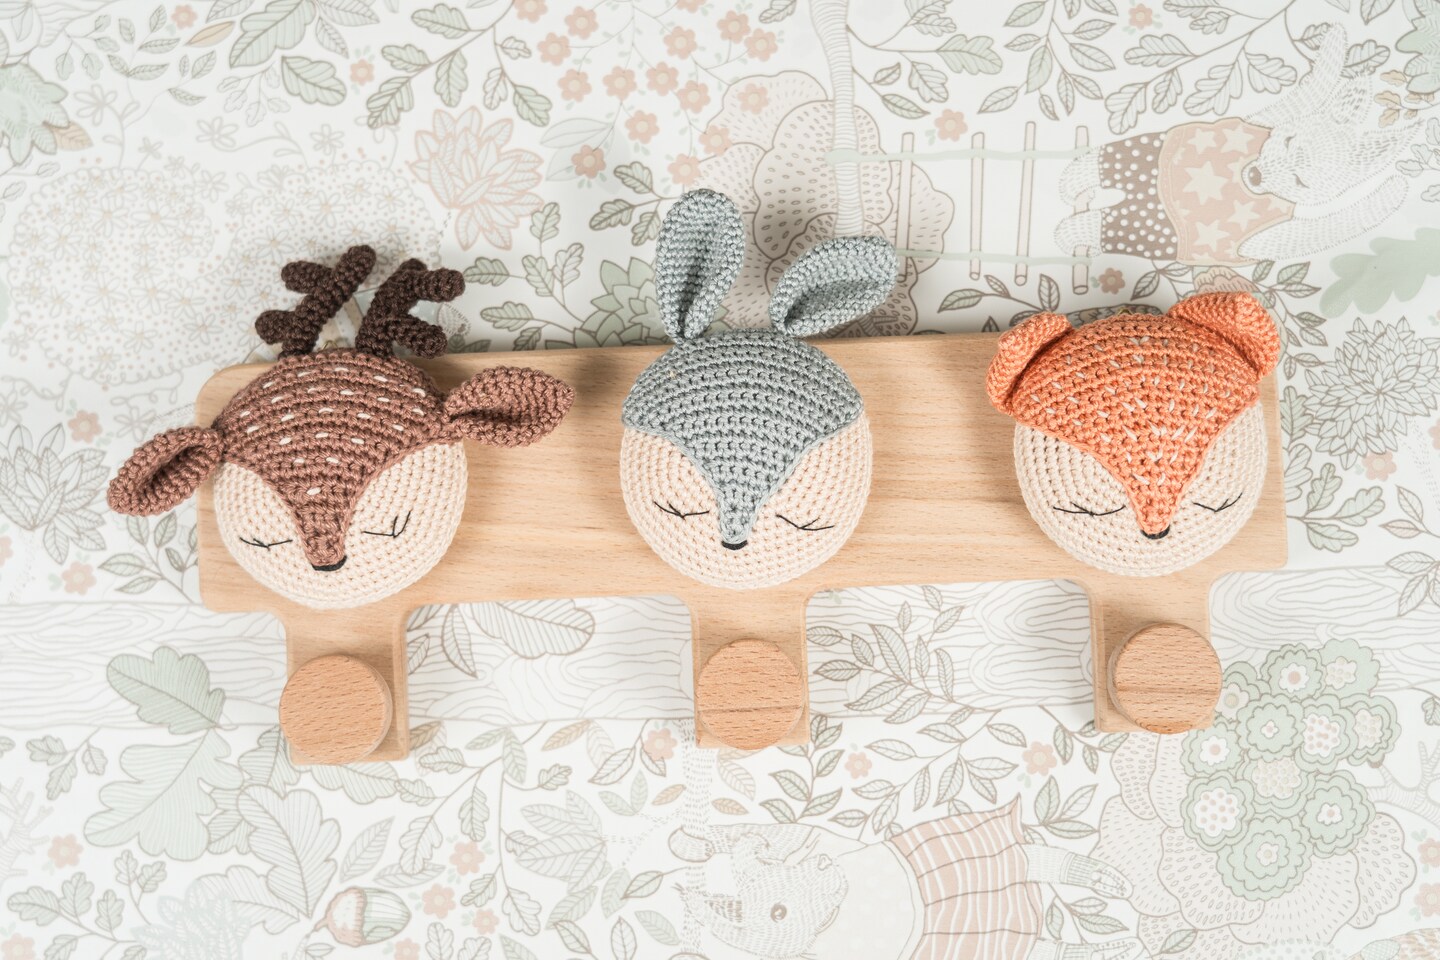 Personalization Crochet Fox Plush, Woodland Nursery Decor, Baby